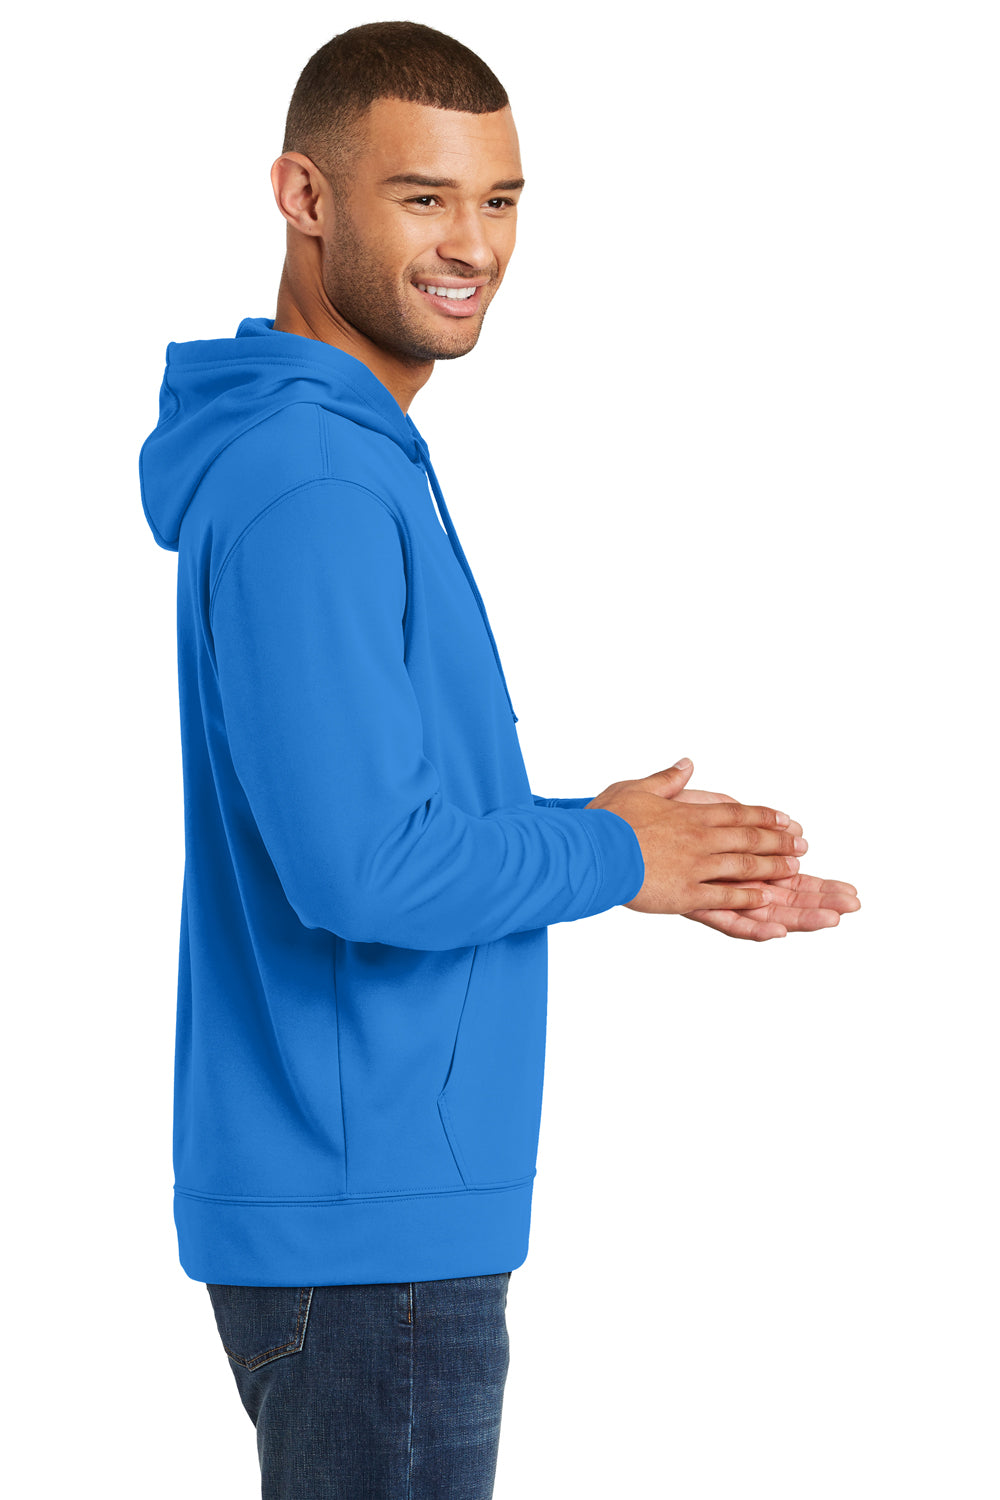 Port & Company PC590H Mens Dry Zone Performance Moisture Wicking Fleece Hooded Sweatshirt Hoodie Royal Blue Side